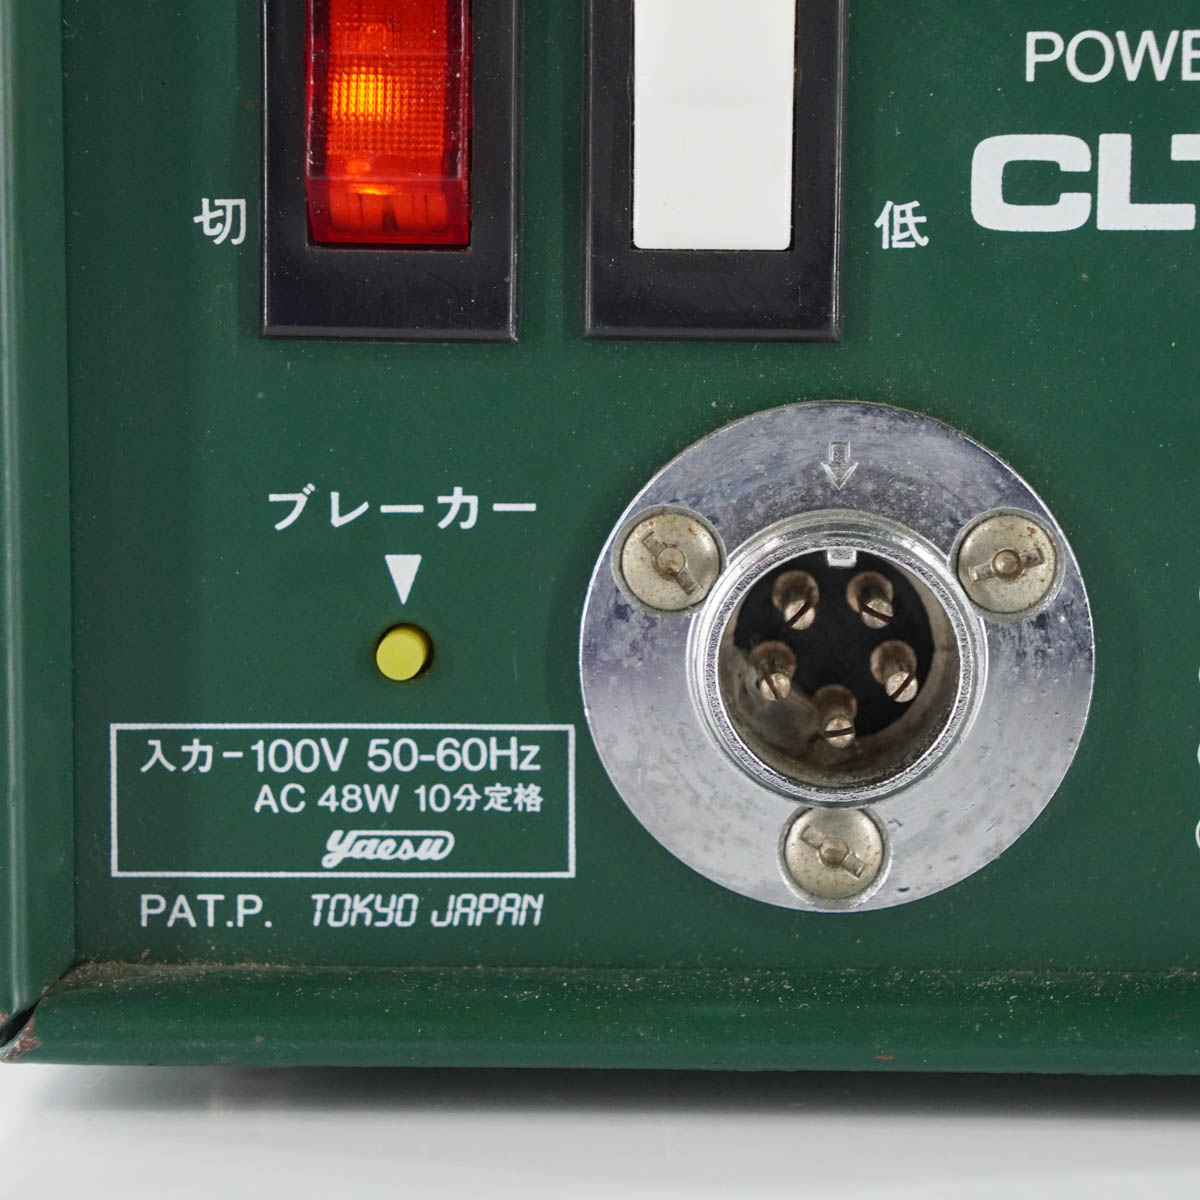 DW]USED 8日保証 セット HIOS CLT-50 CL-4000 電動ドライバー 電源ユニット [05012-0026]  工具,工具その他(Others) 中古販売分析機器計測器総合商社ディルウィングス